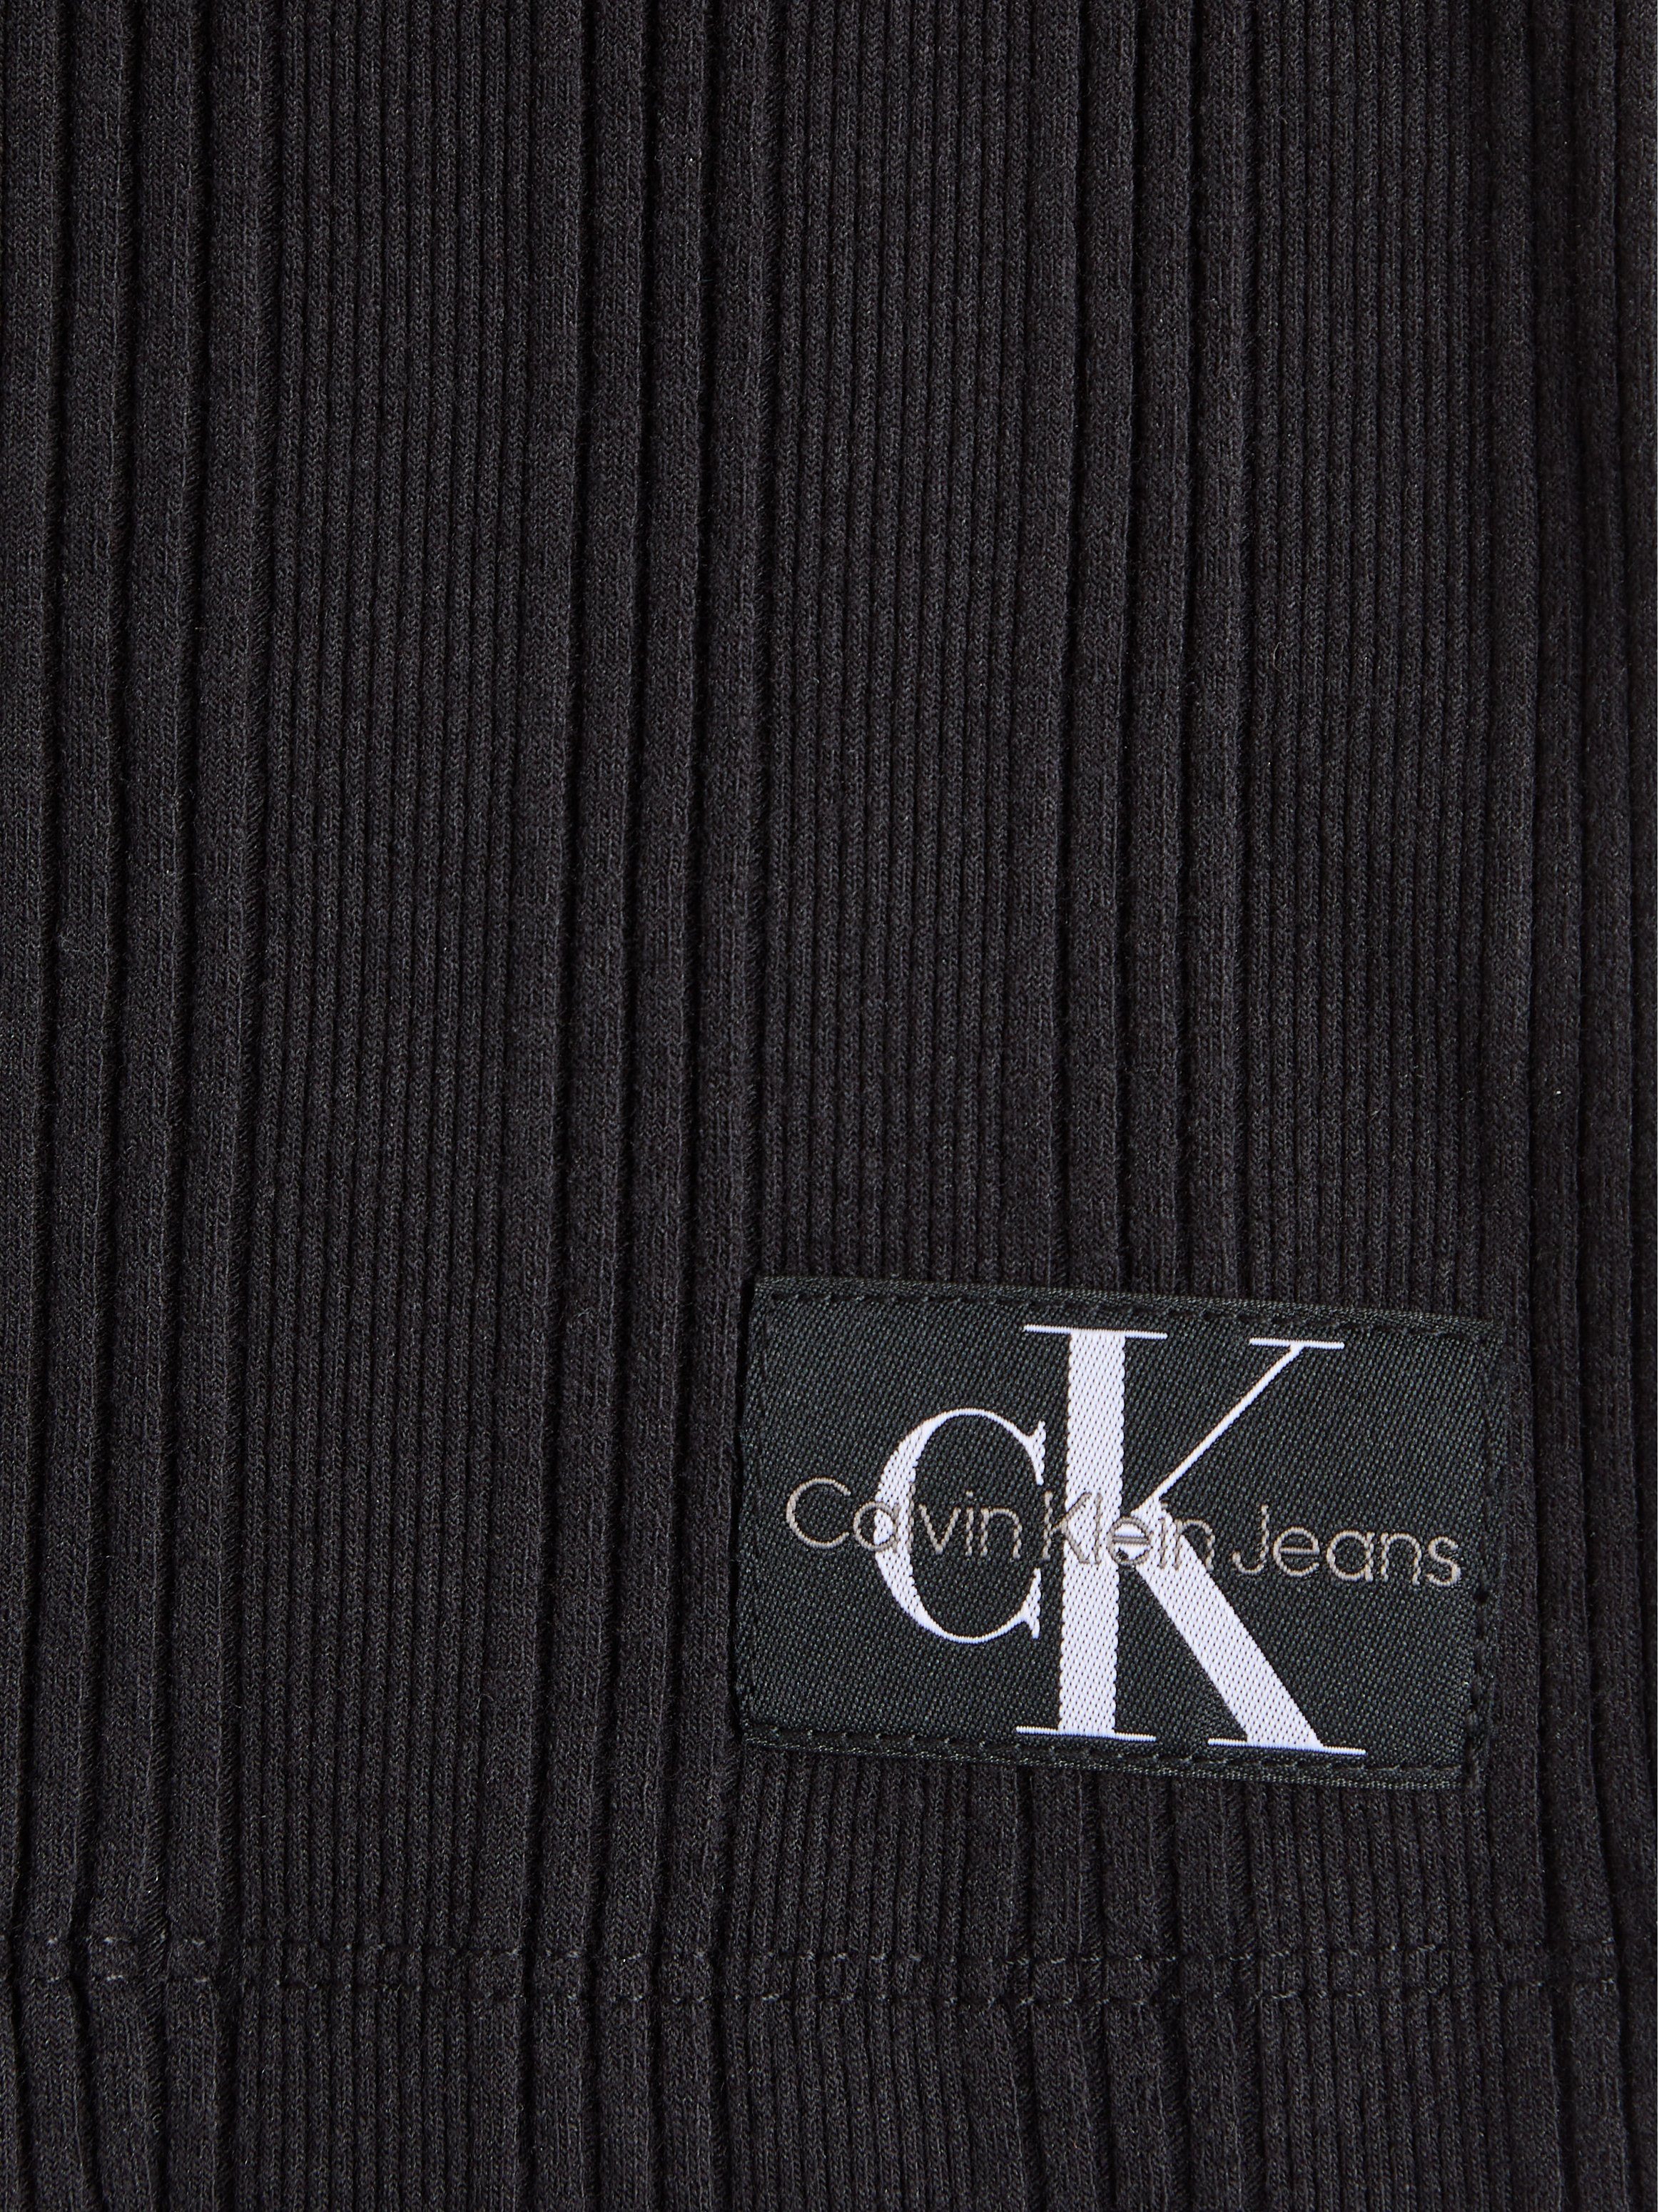 Calvin Klein SHIRT RIB ELONGATED Shirtkleid DRESS Jeans BADGE